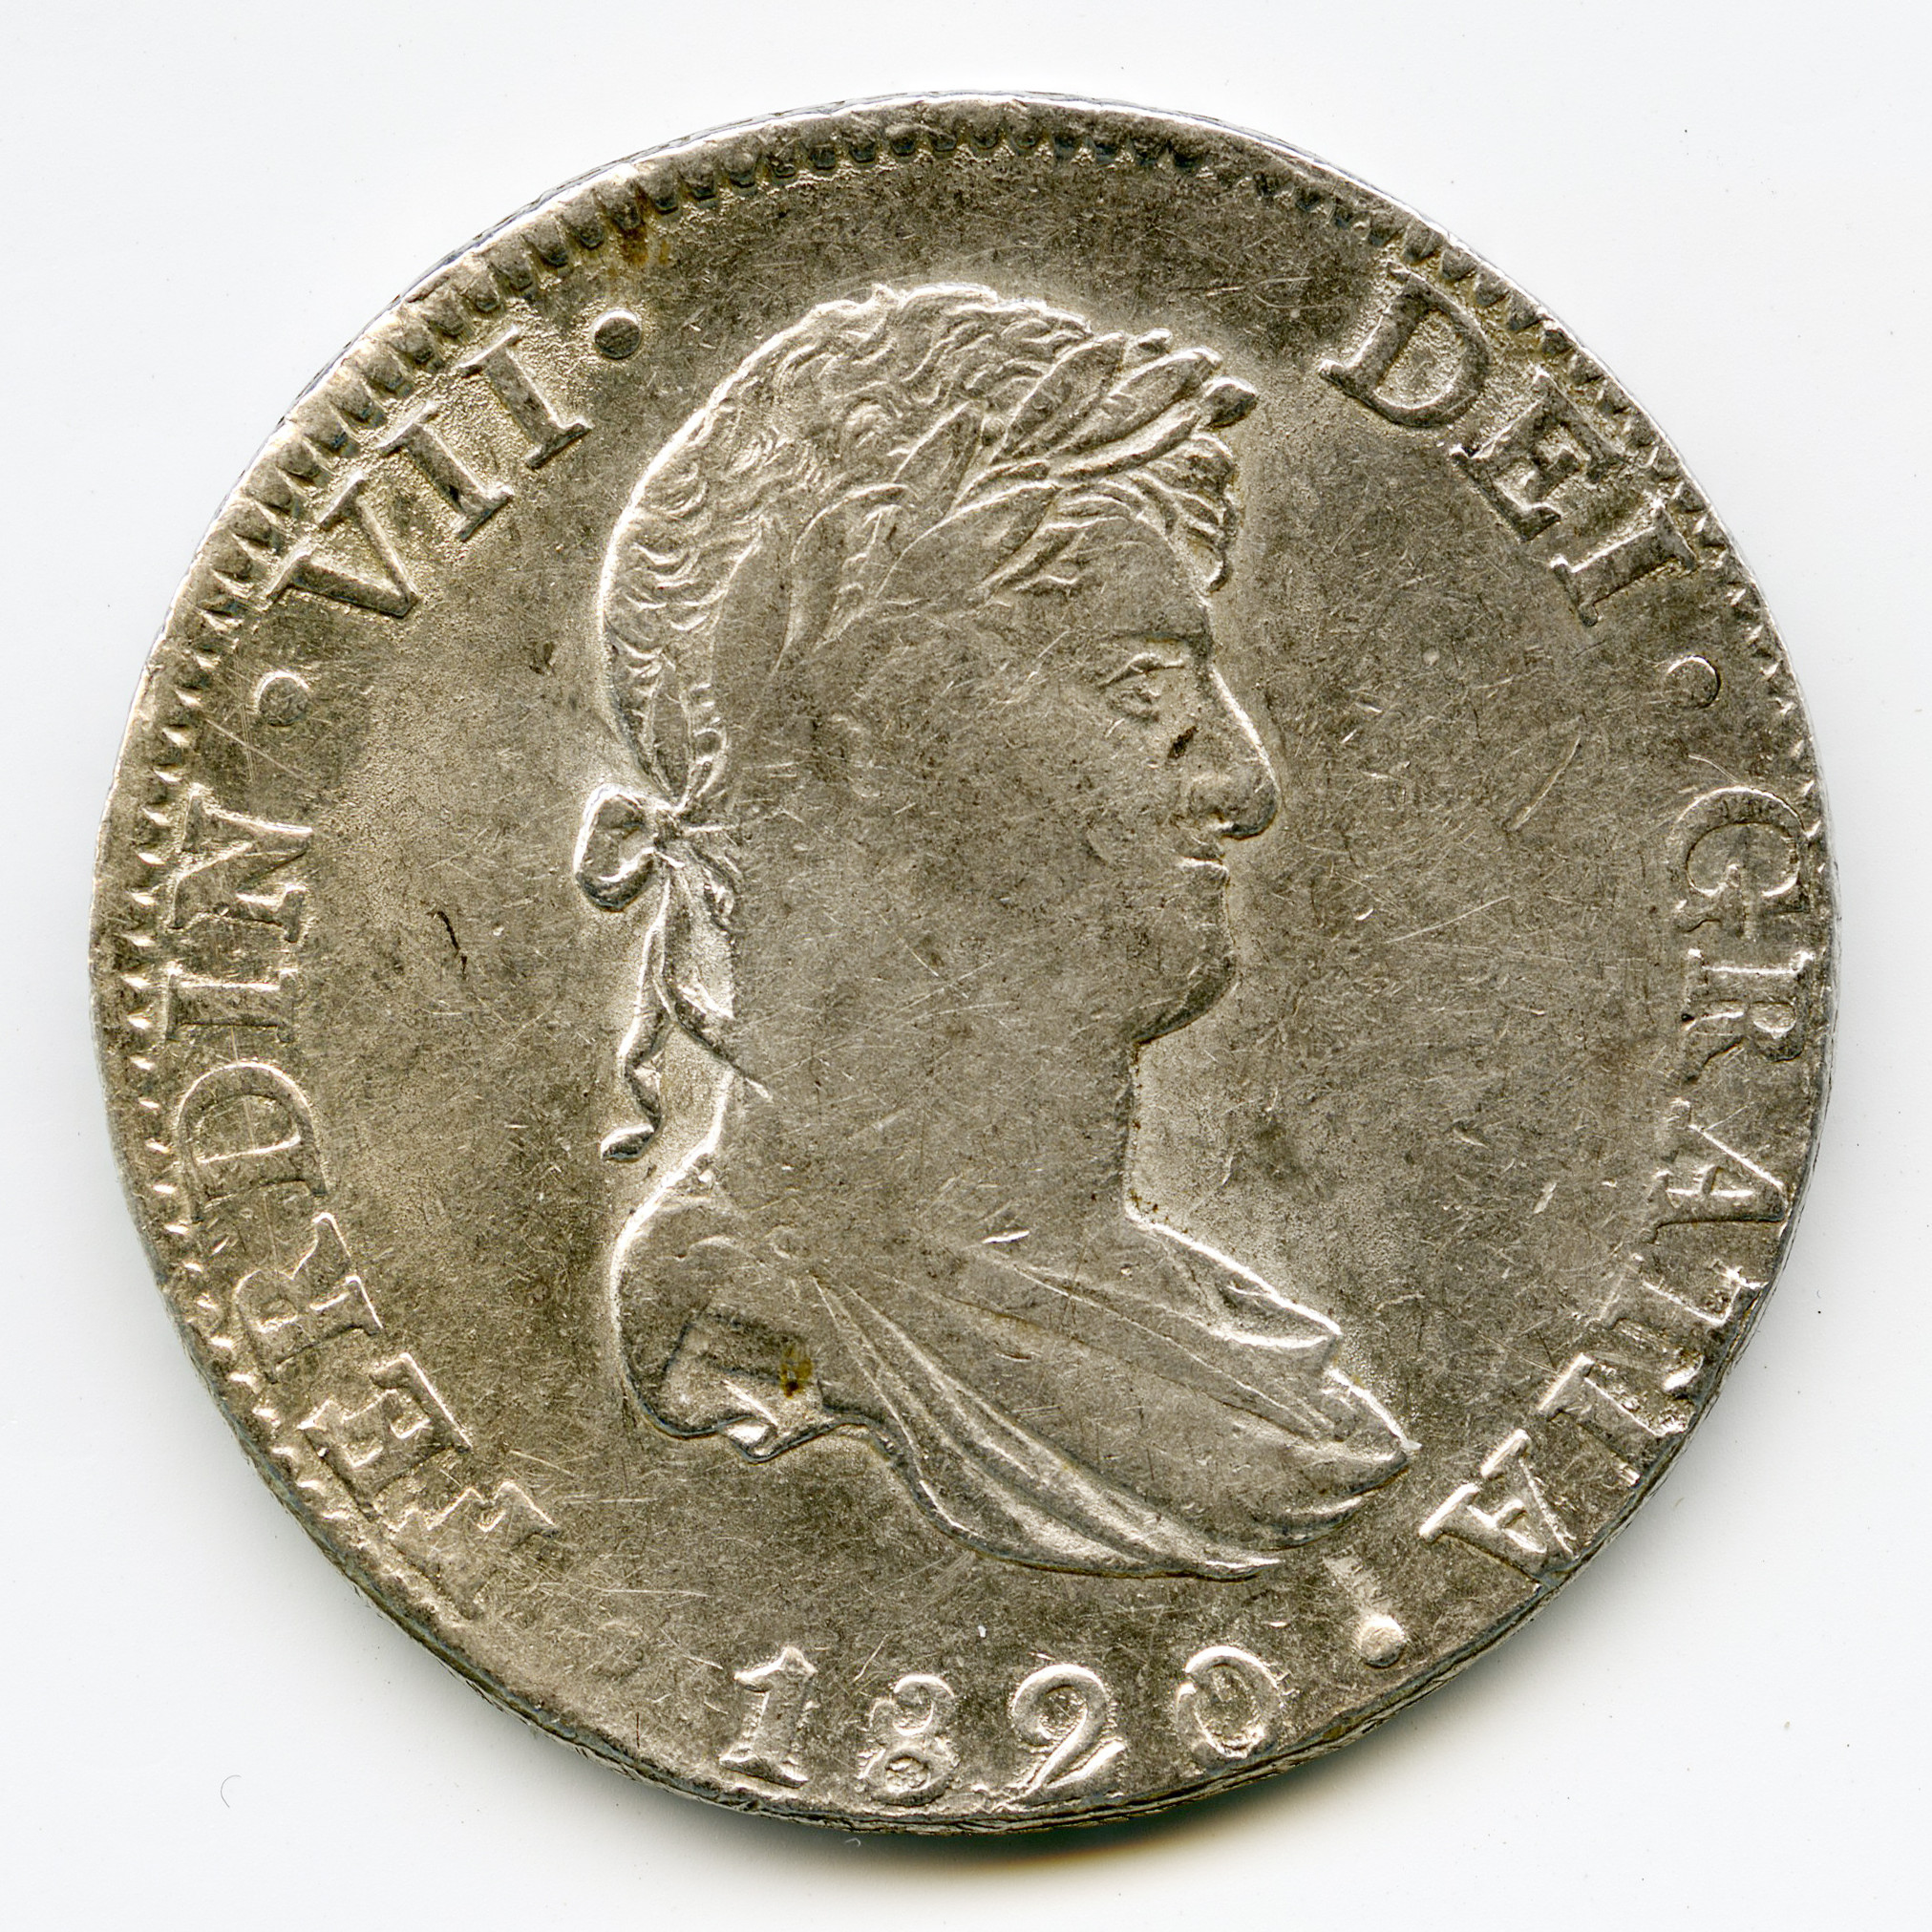 Mexique - Ferdinand VII - 8 reales - 1820 avers